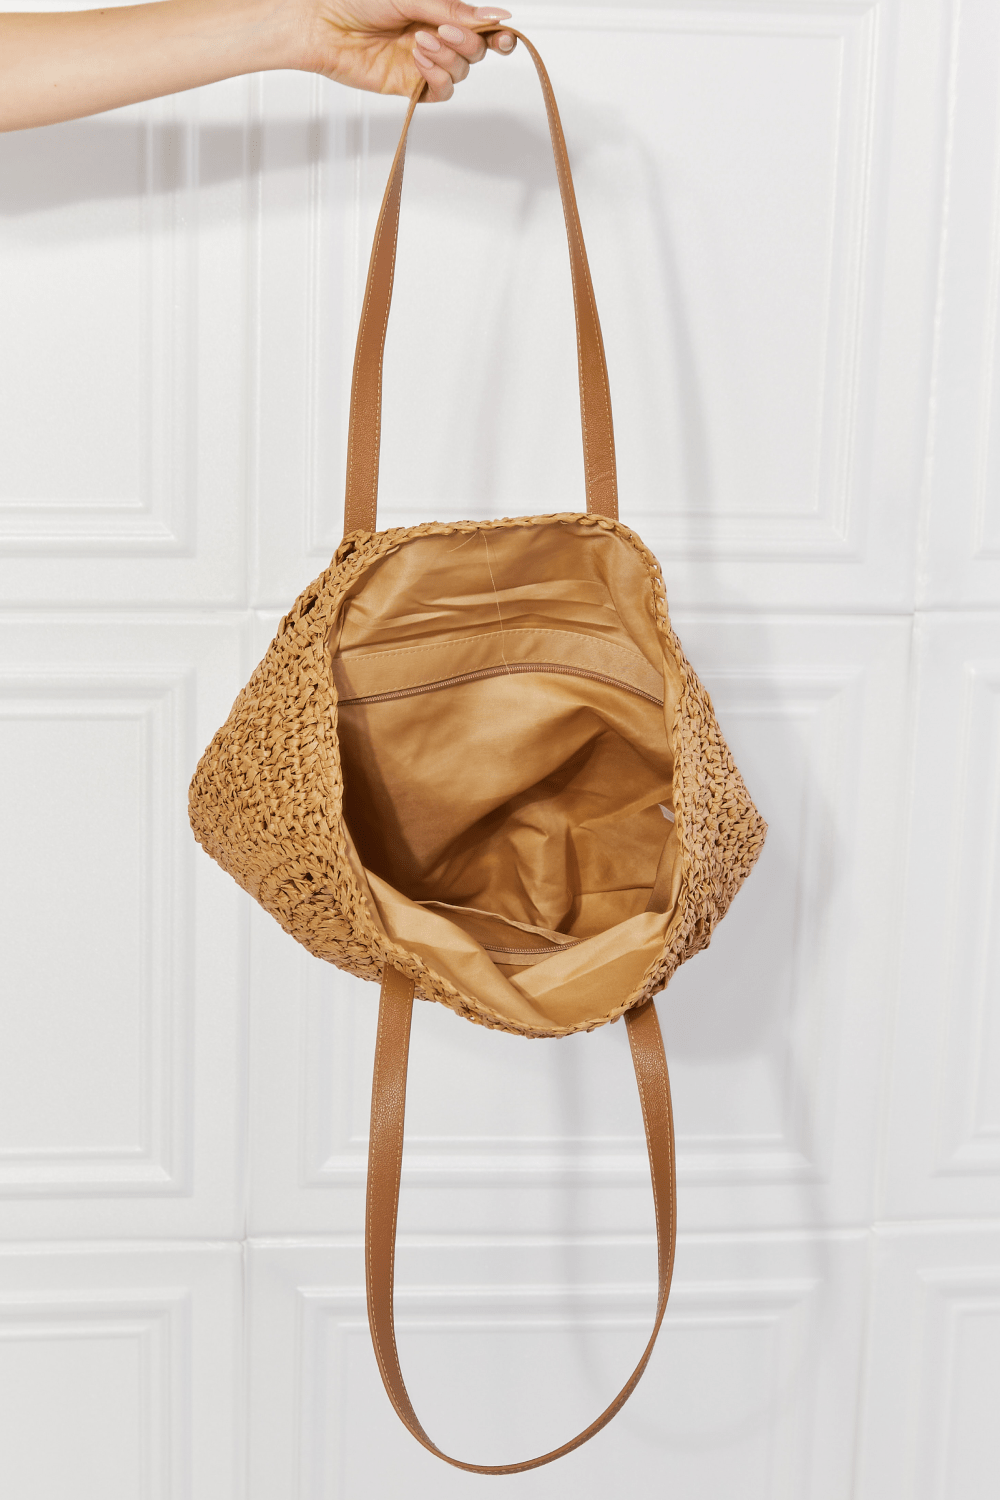 Sienna Justin Taylor C&#39;est La Vie Crochet Handbag in Caramel Sentient Beauty Fashions Bag